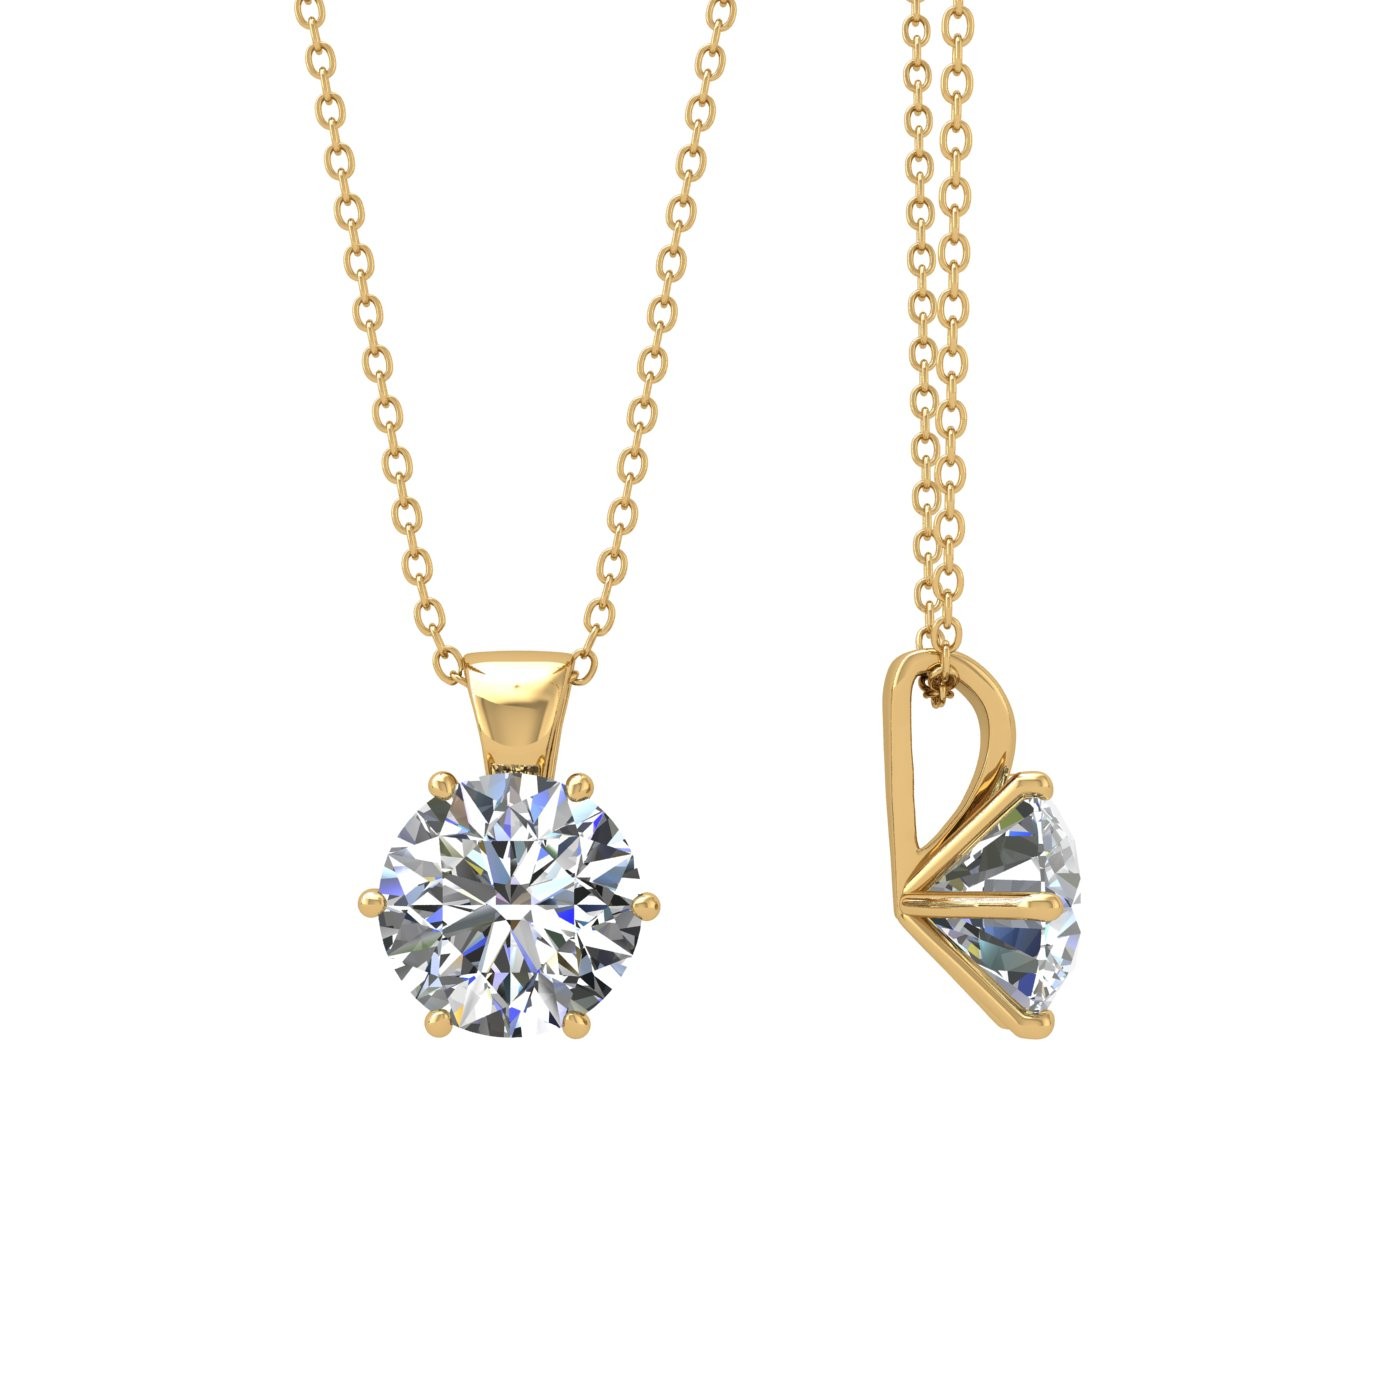 18k yellow gold 1.2 ct 6 prongs round shape diamond pendant